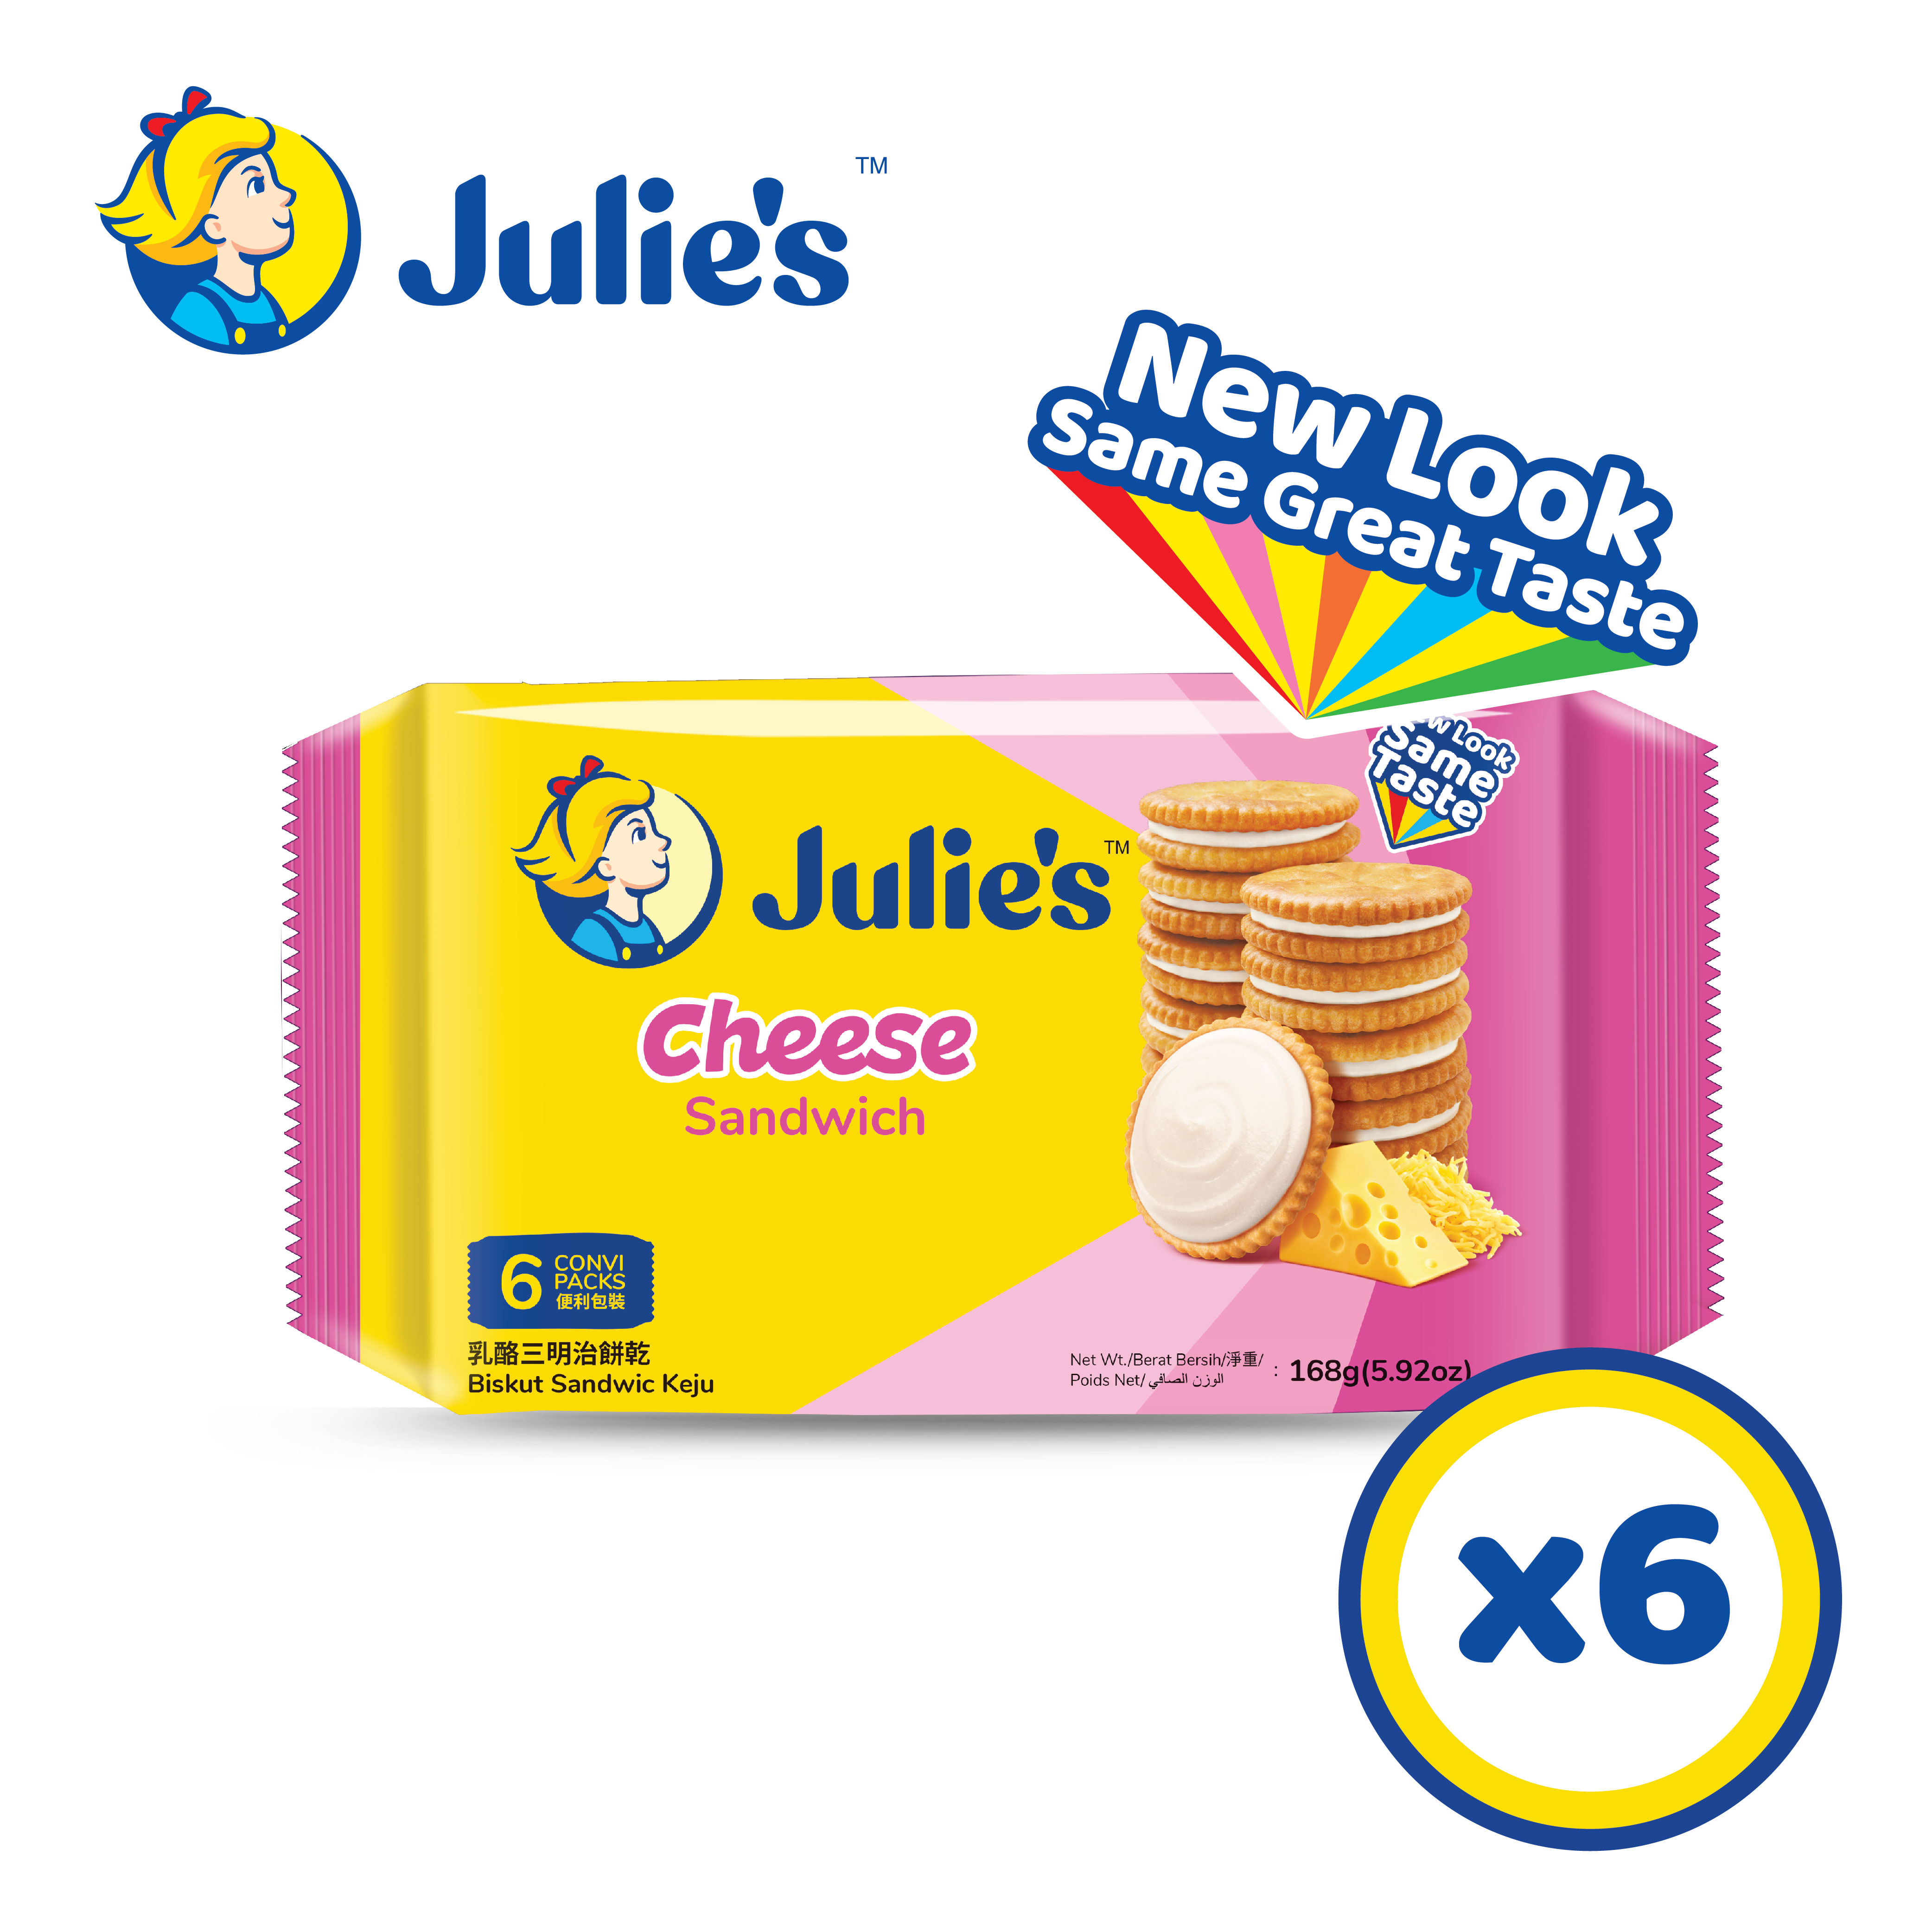 Julie's Cheese Sandwich 168g x 6 pack